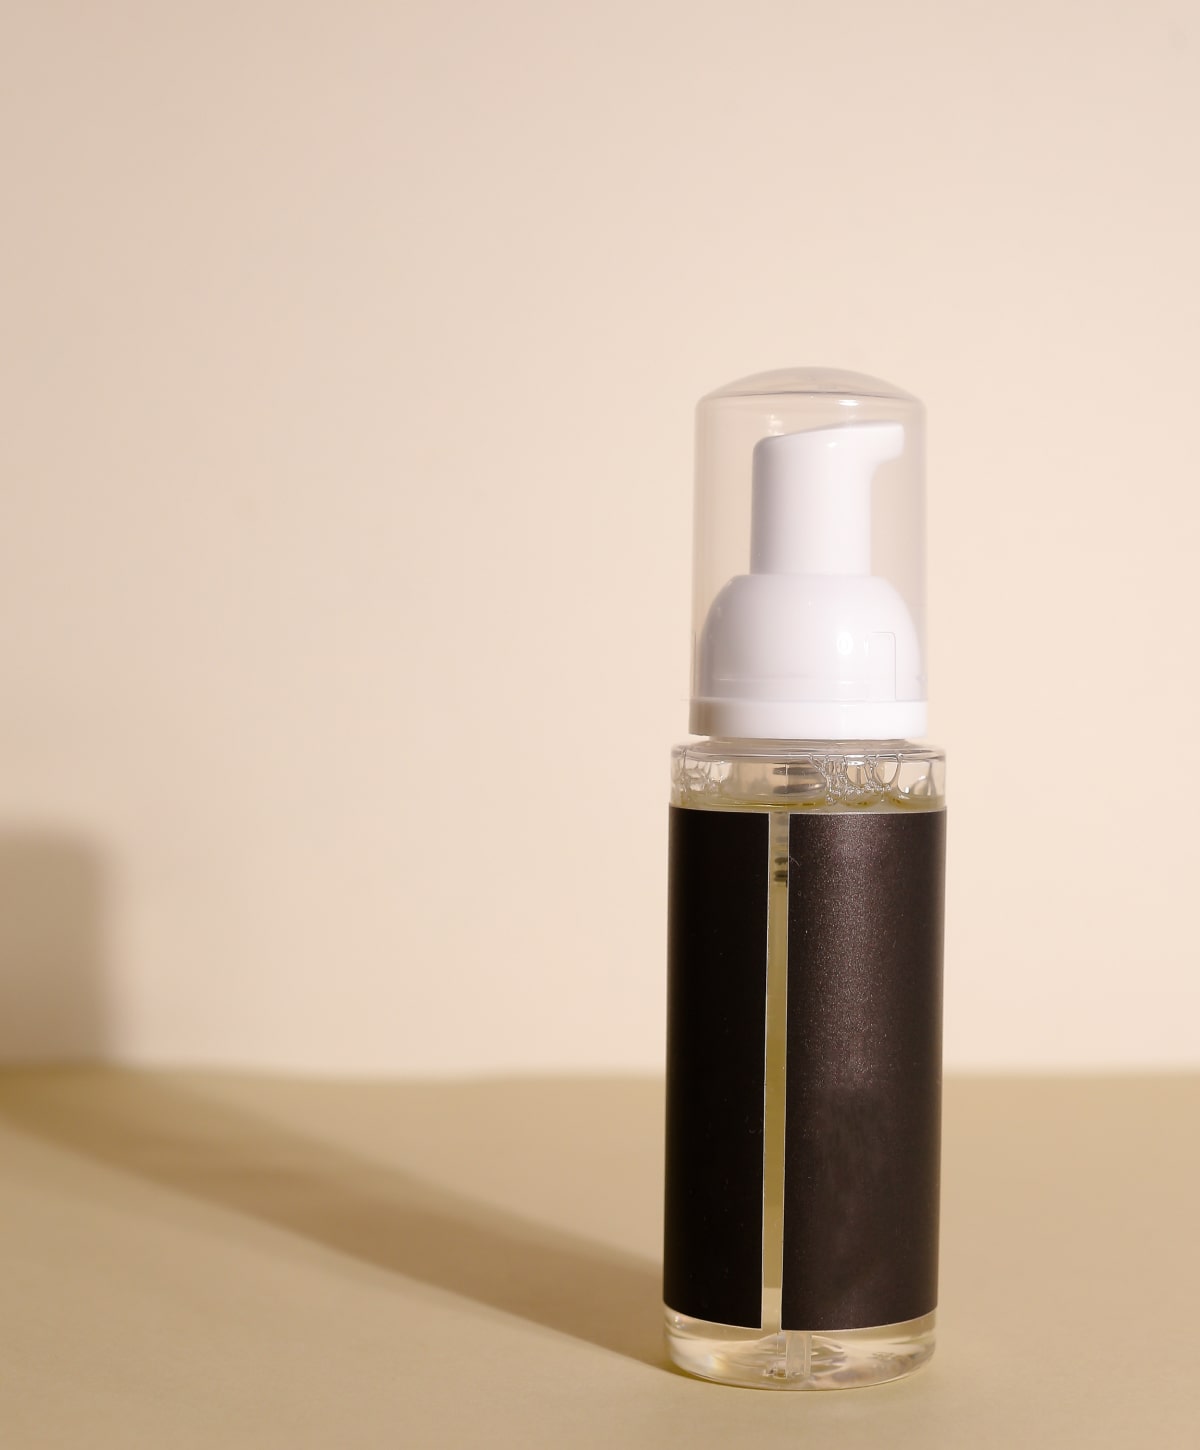 skincare bottle on beige background